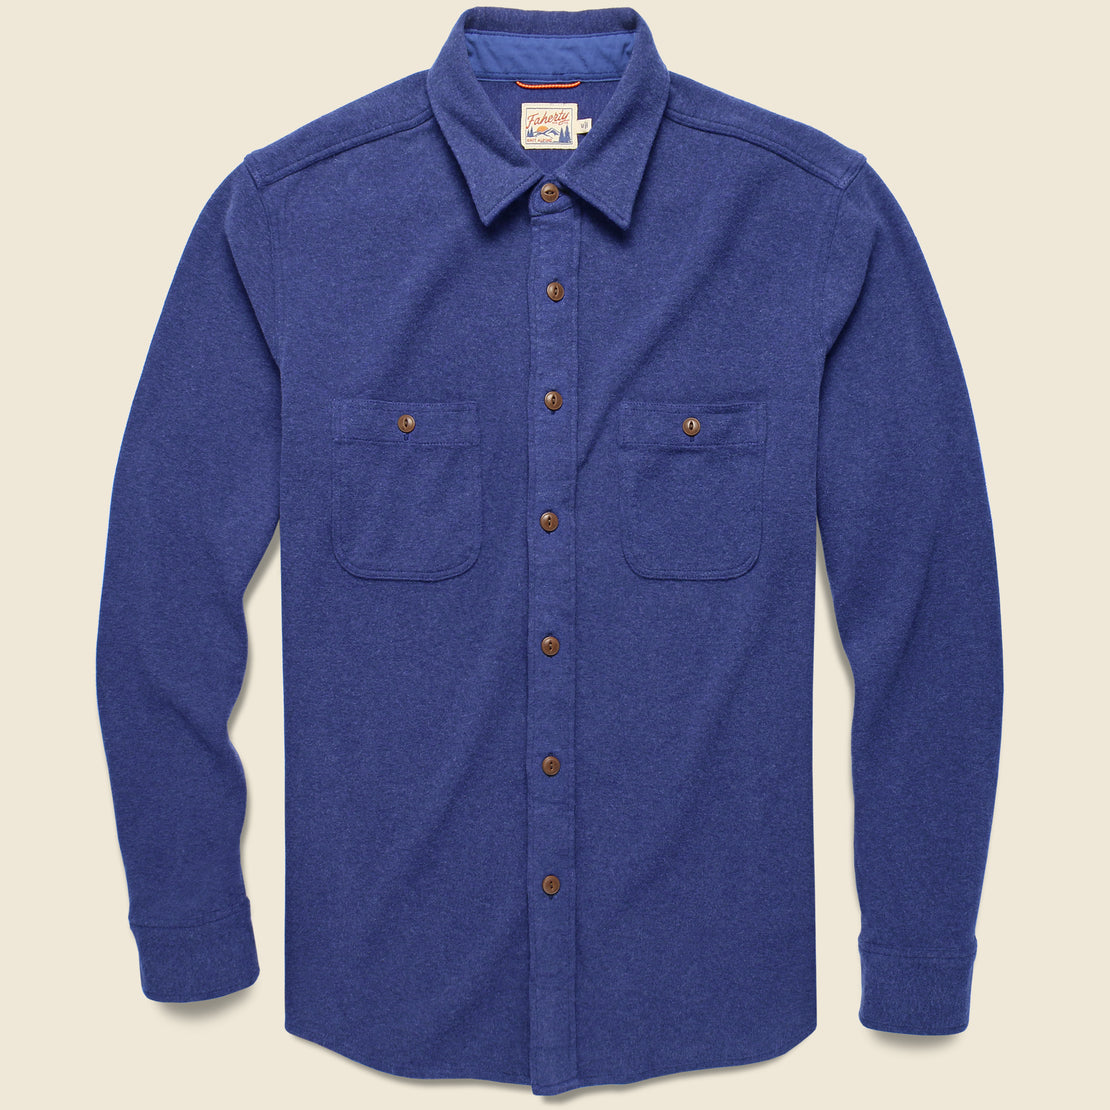 Faherty Knit Alpine Shirt - Bright Blue